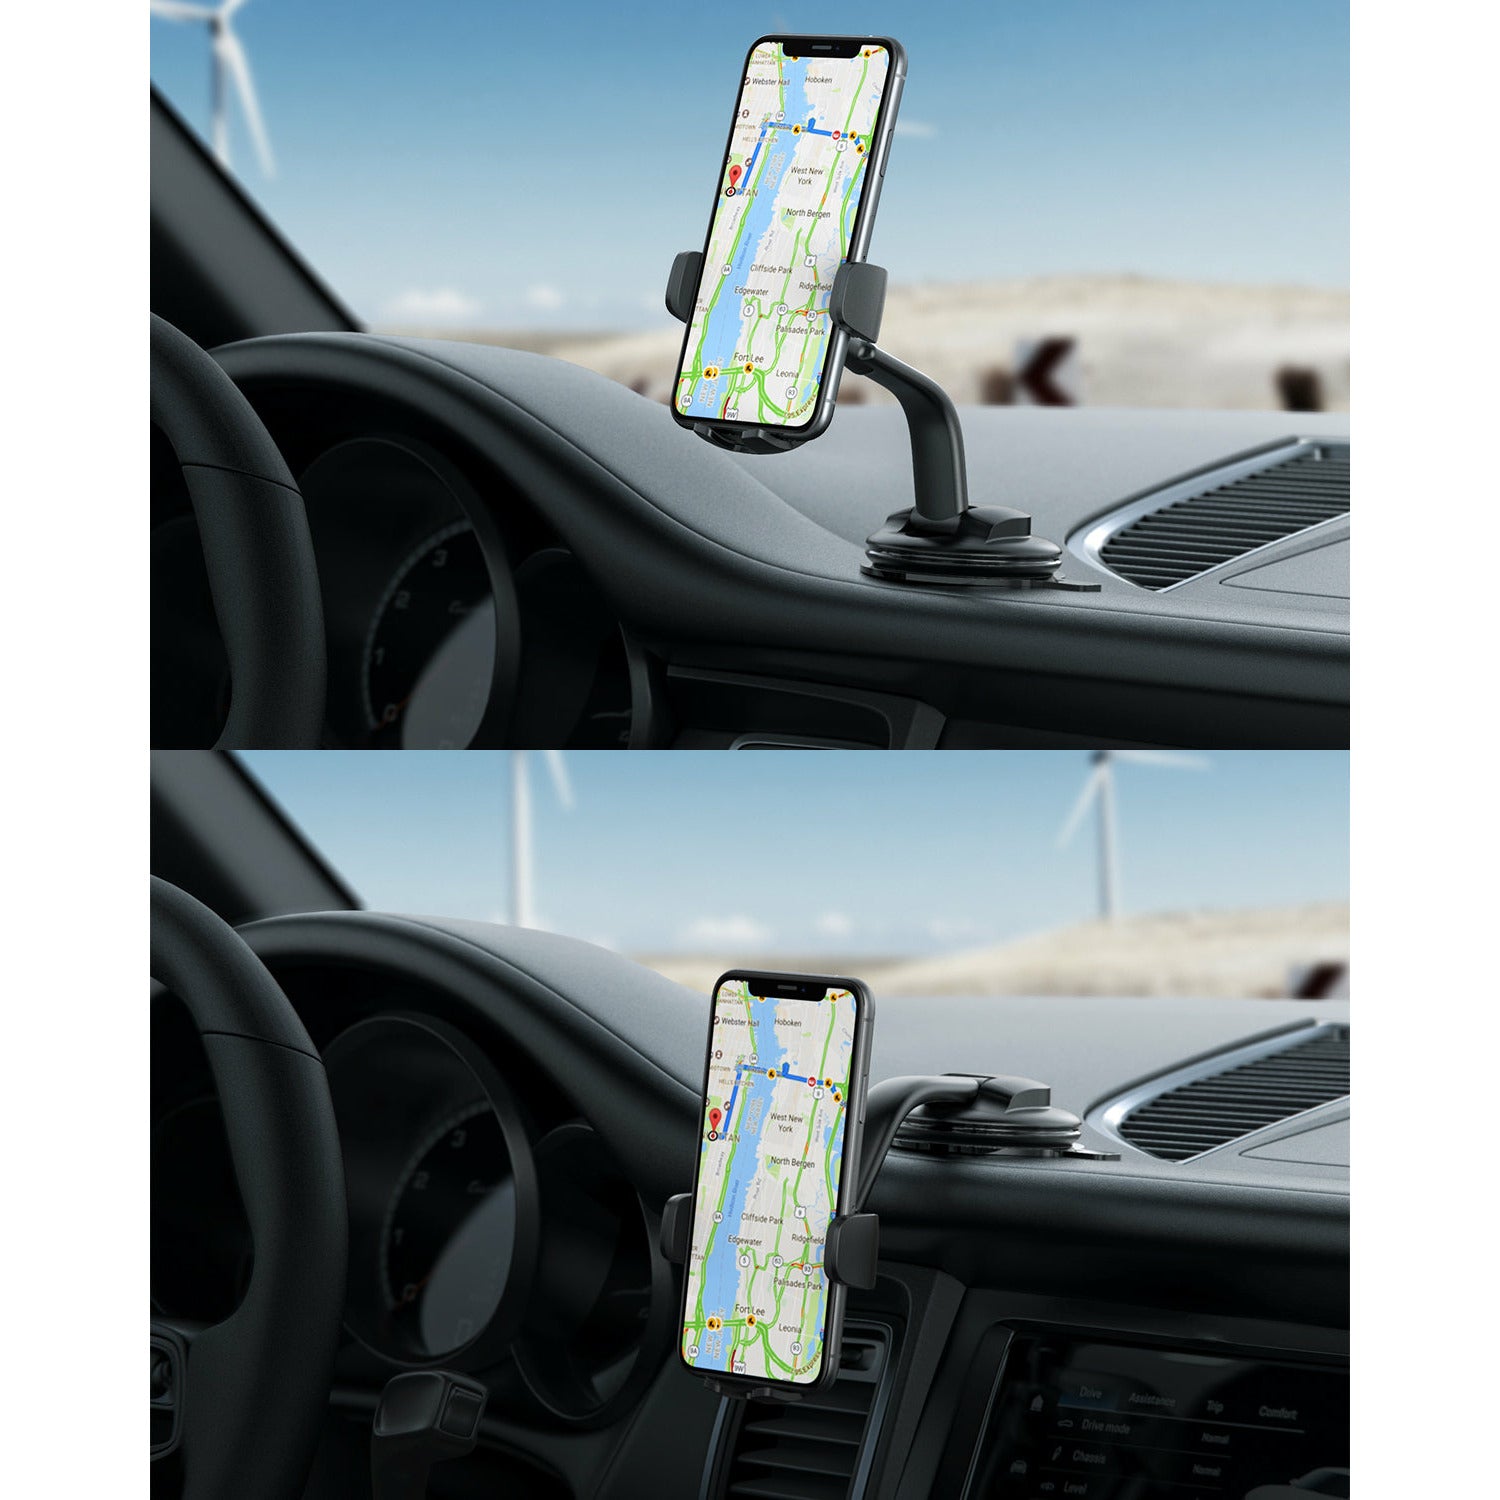 AUKEY Car Phone Holder Dashboard HD C50 Black Gray